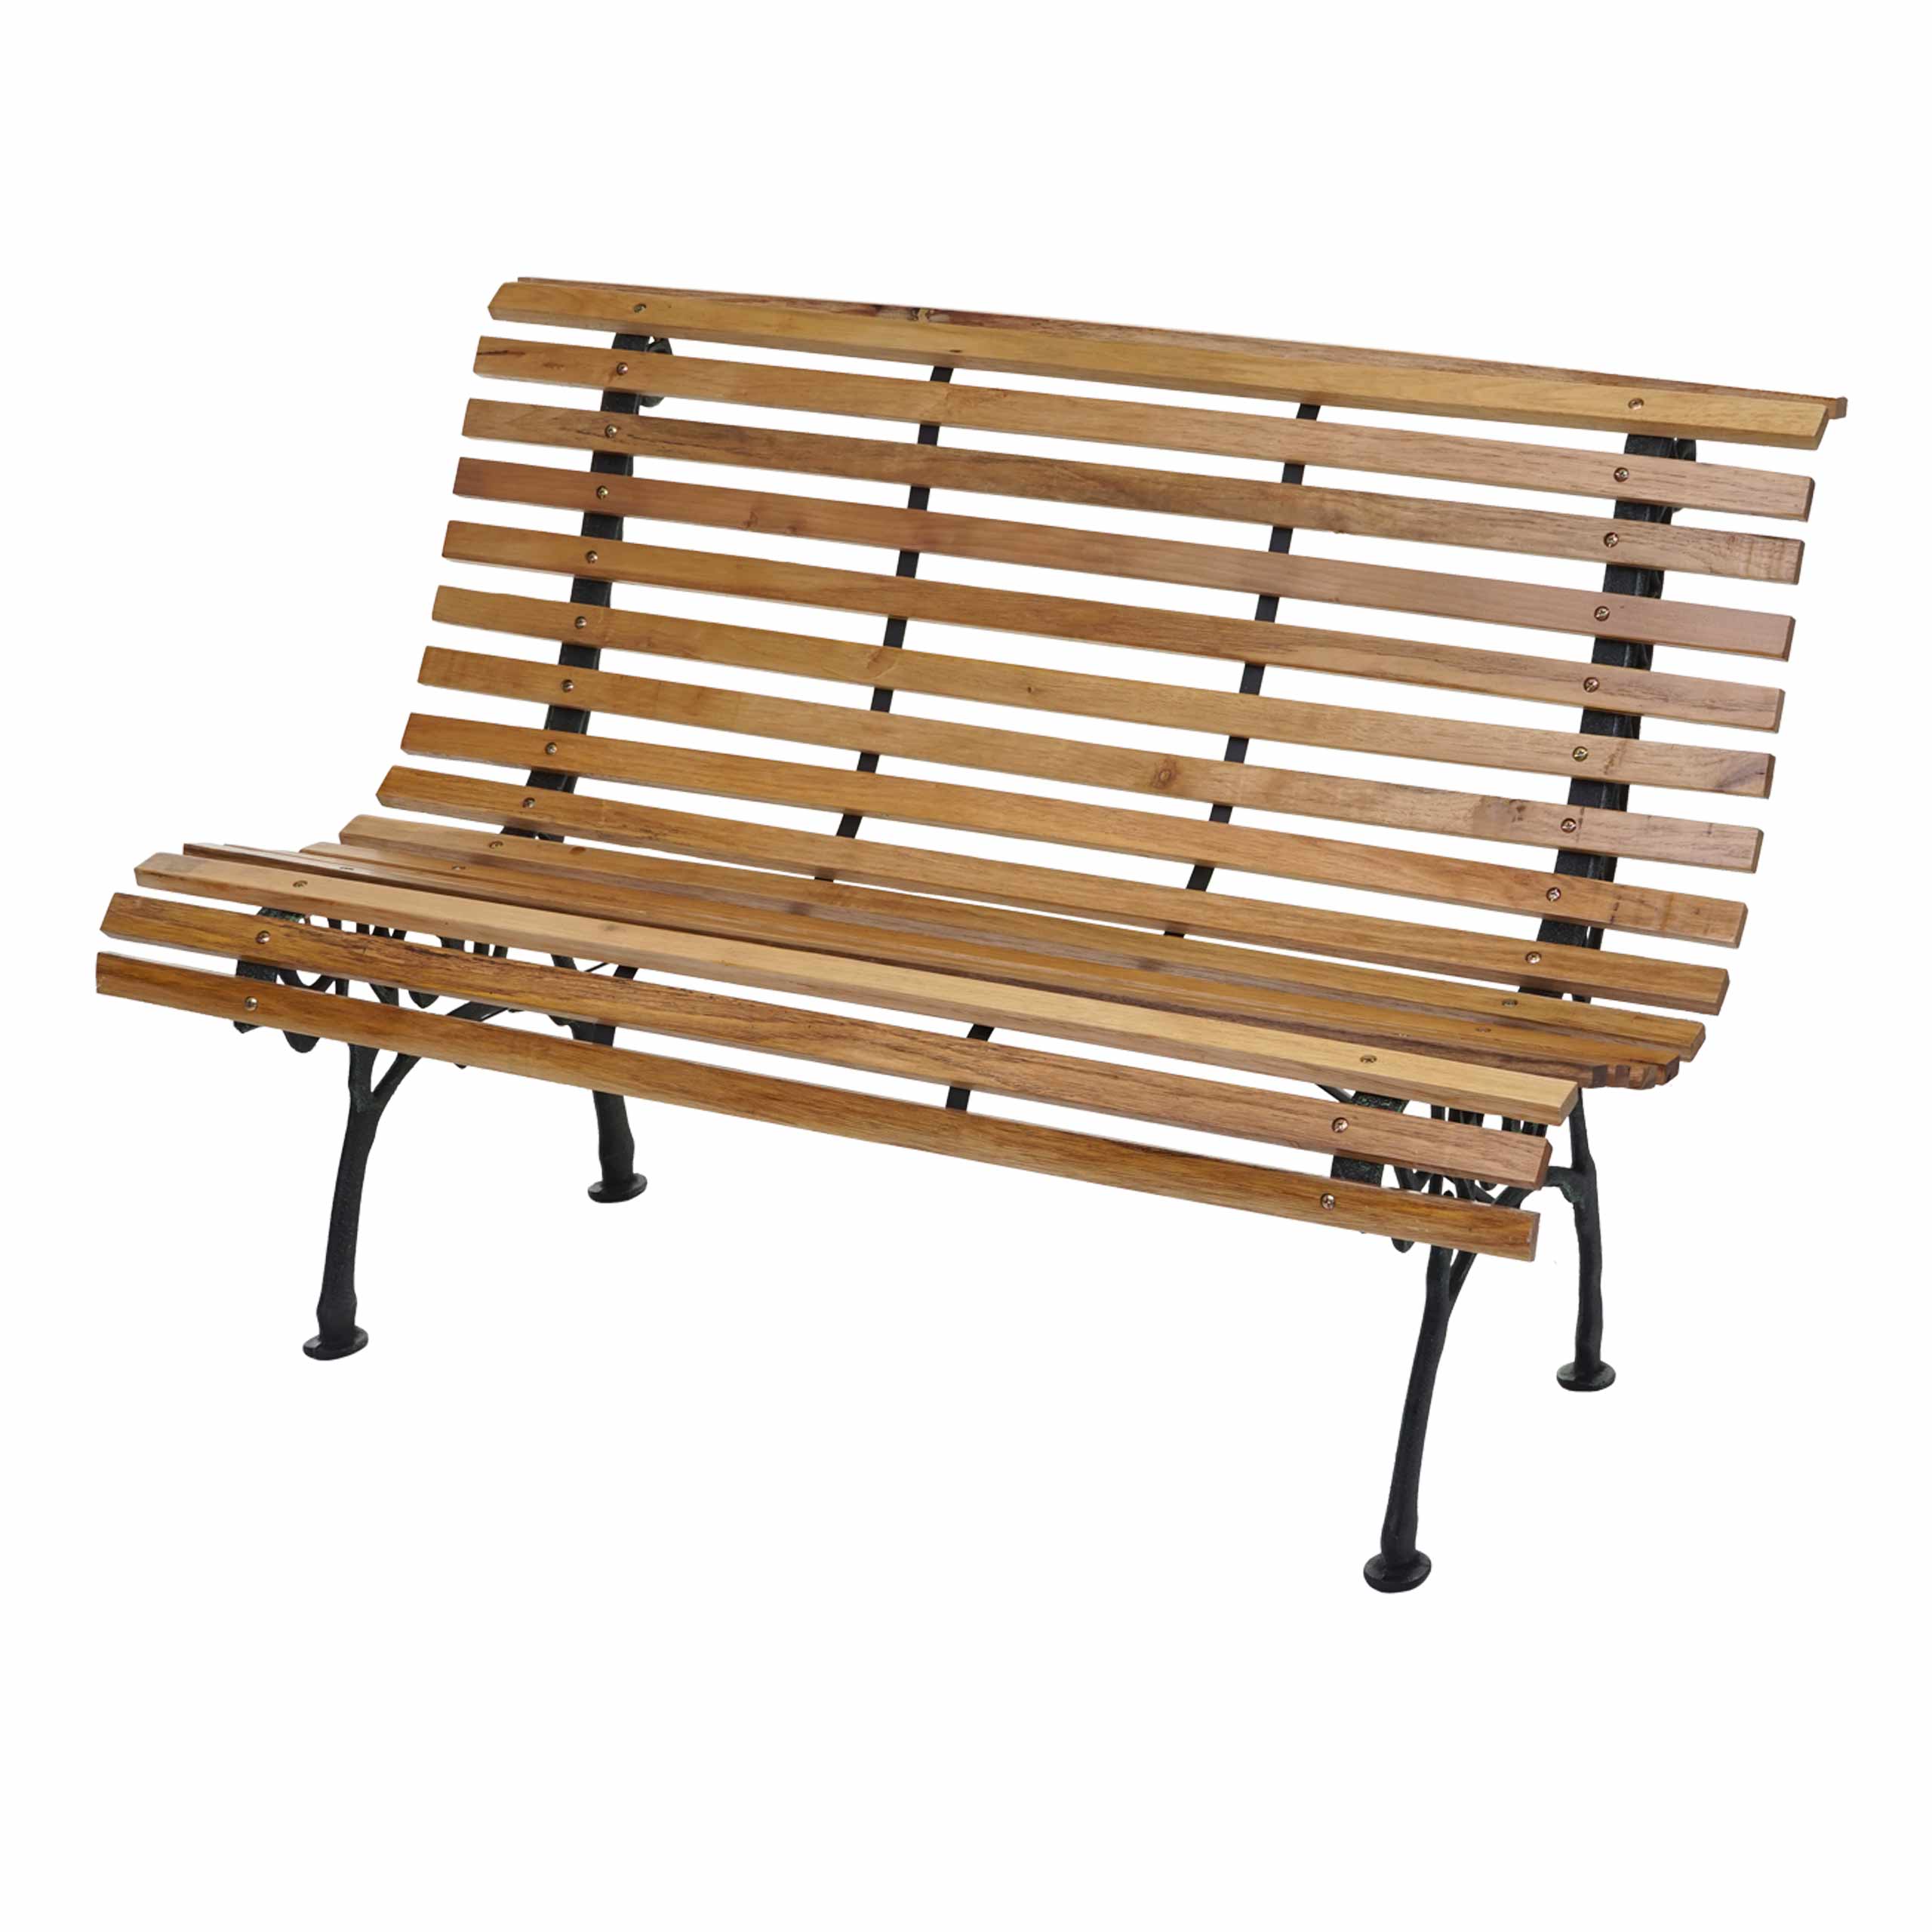 Panca panchina da giardino terrazza HWC-F97 legno ghisa | eBay